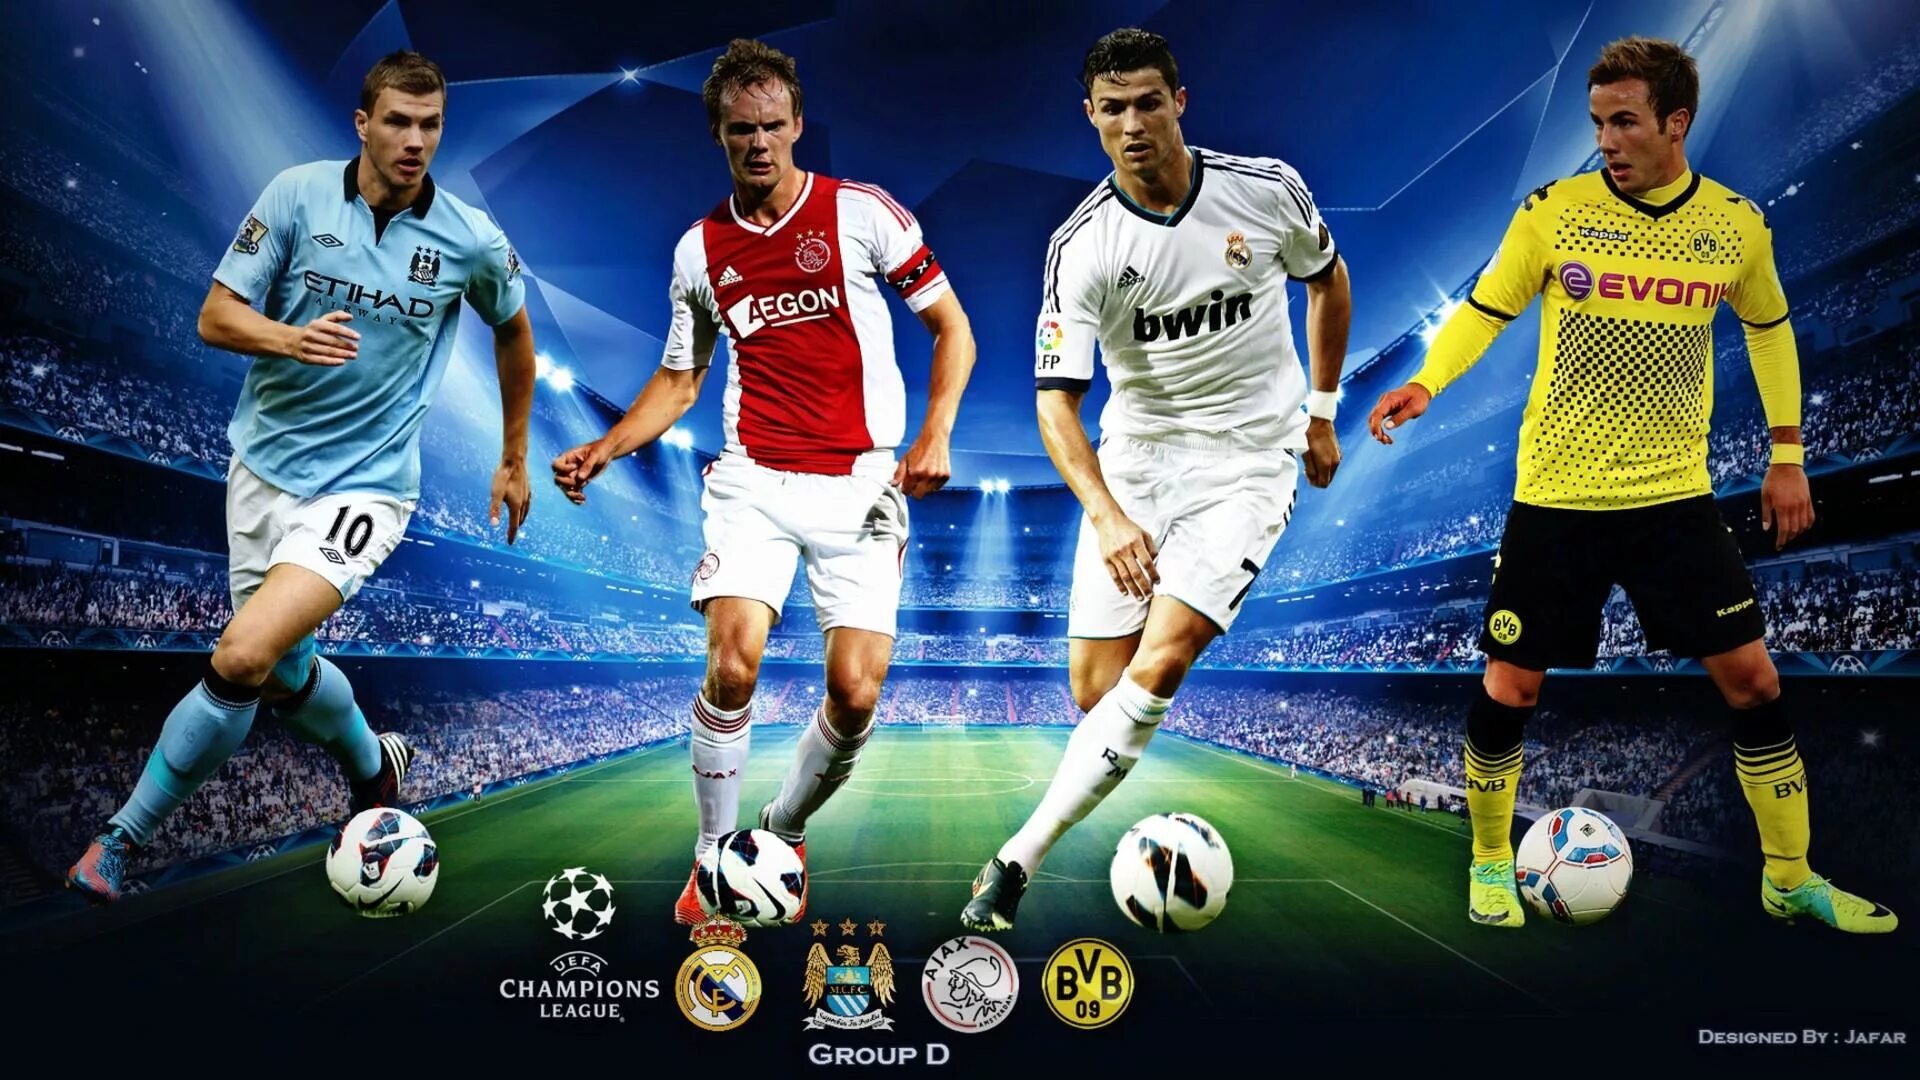 Футболисты. Футбольные обои. League of Champions Soccer. Football Champions League. Players league